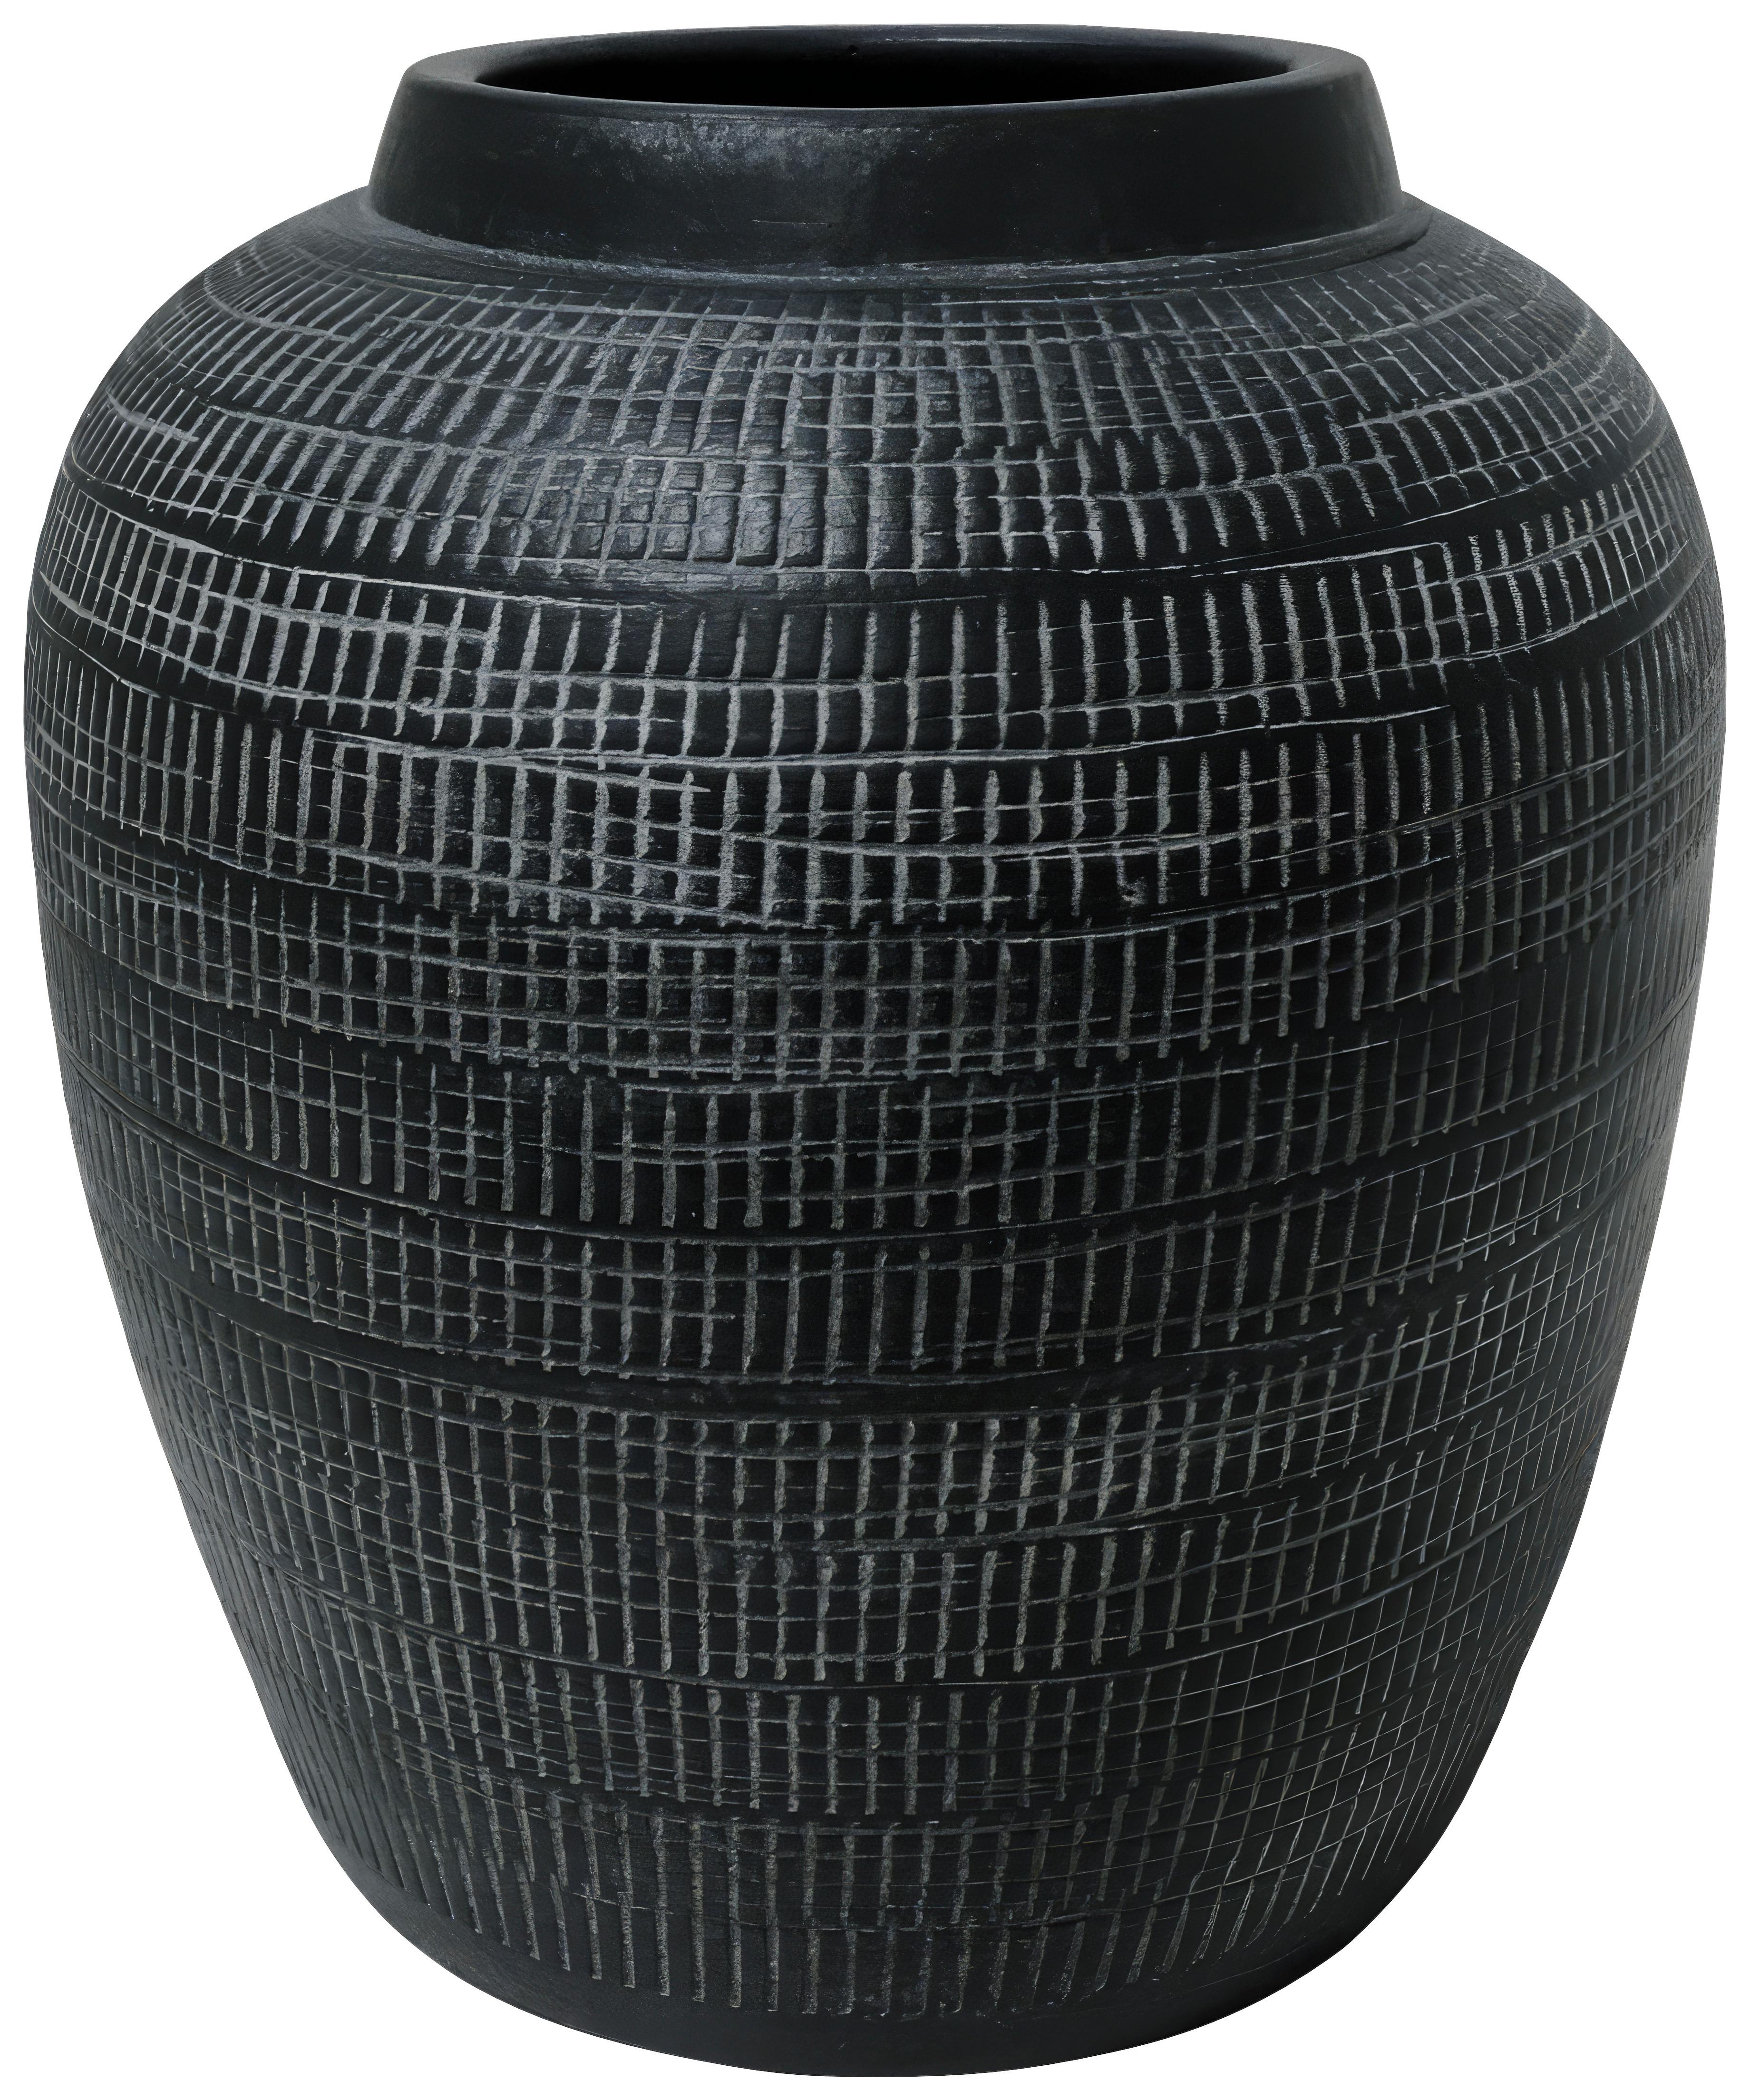 Váza Manuel, 27/30cm - tmavě šedá, Moderní, keramika (27/30cm) - Premium Living